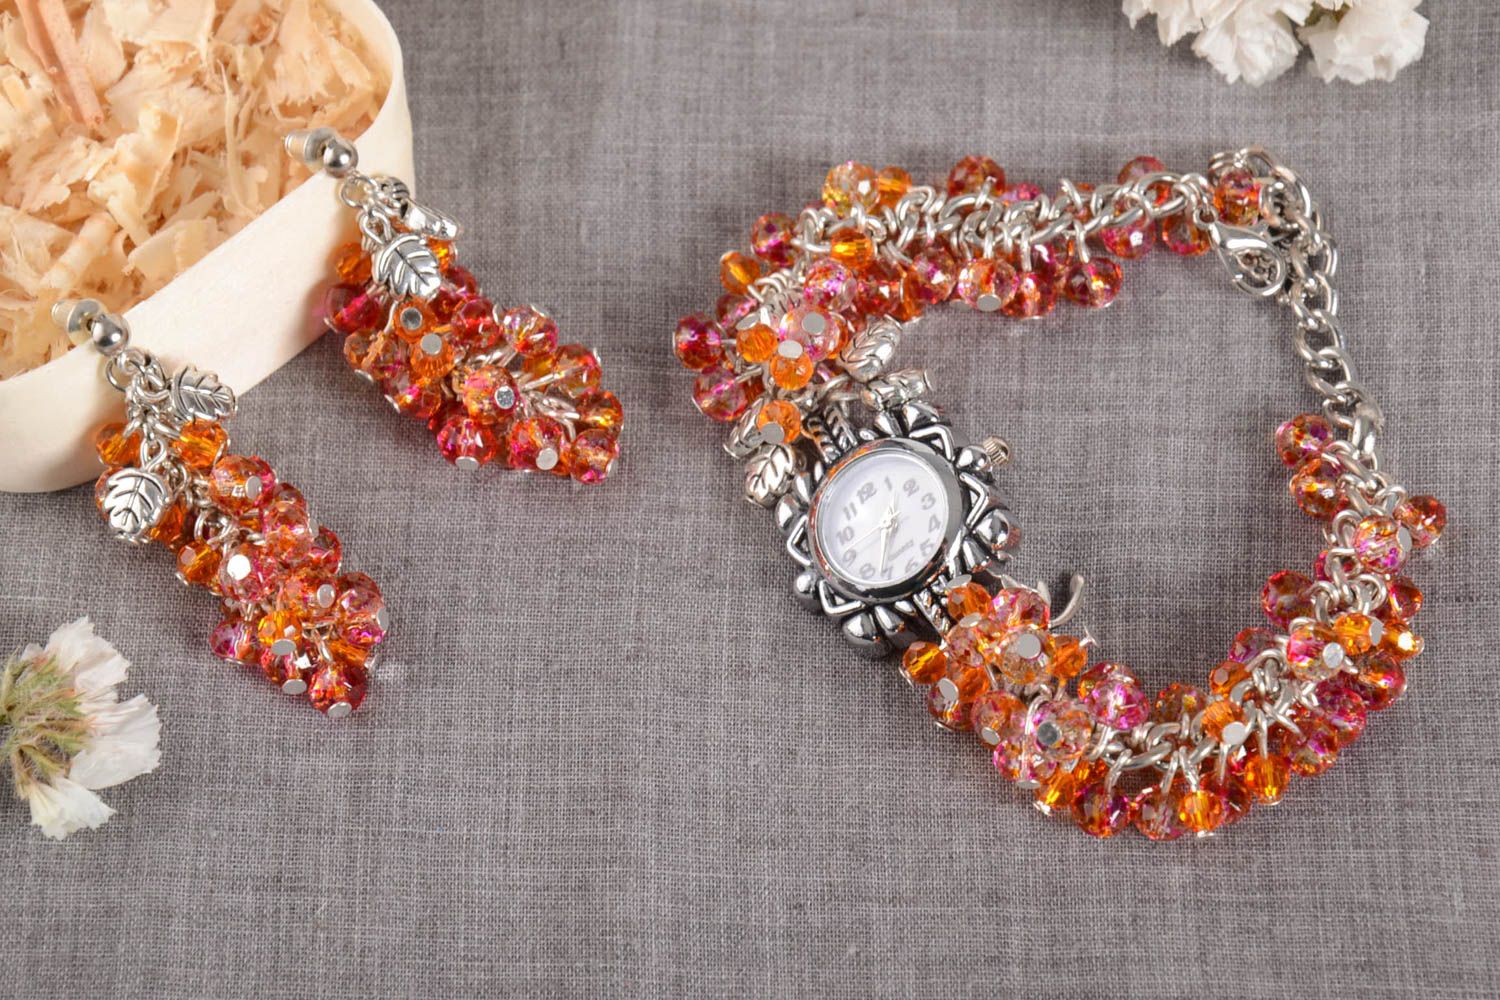 Unusual handmade beaded earrings wrist watch bacelet designs gifts for her photo 1